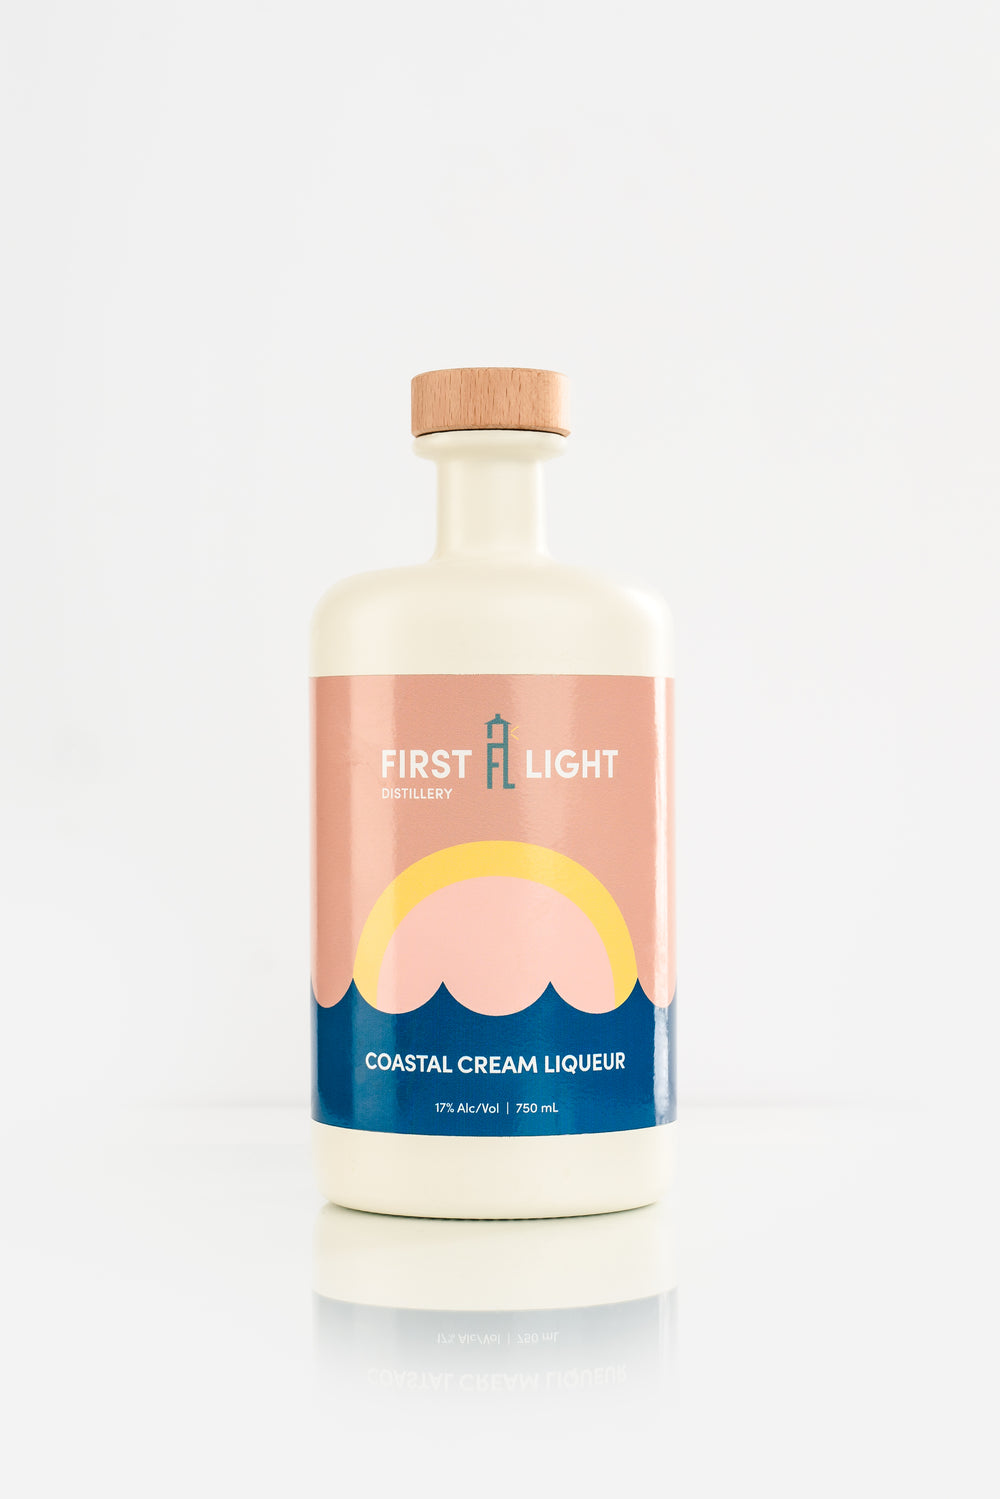 First Light Coastal Cream Liqueur